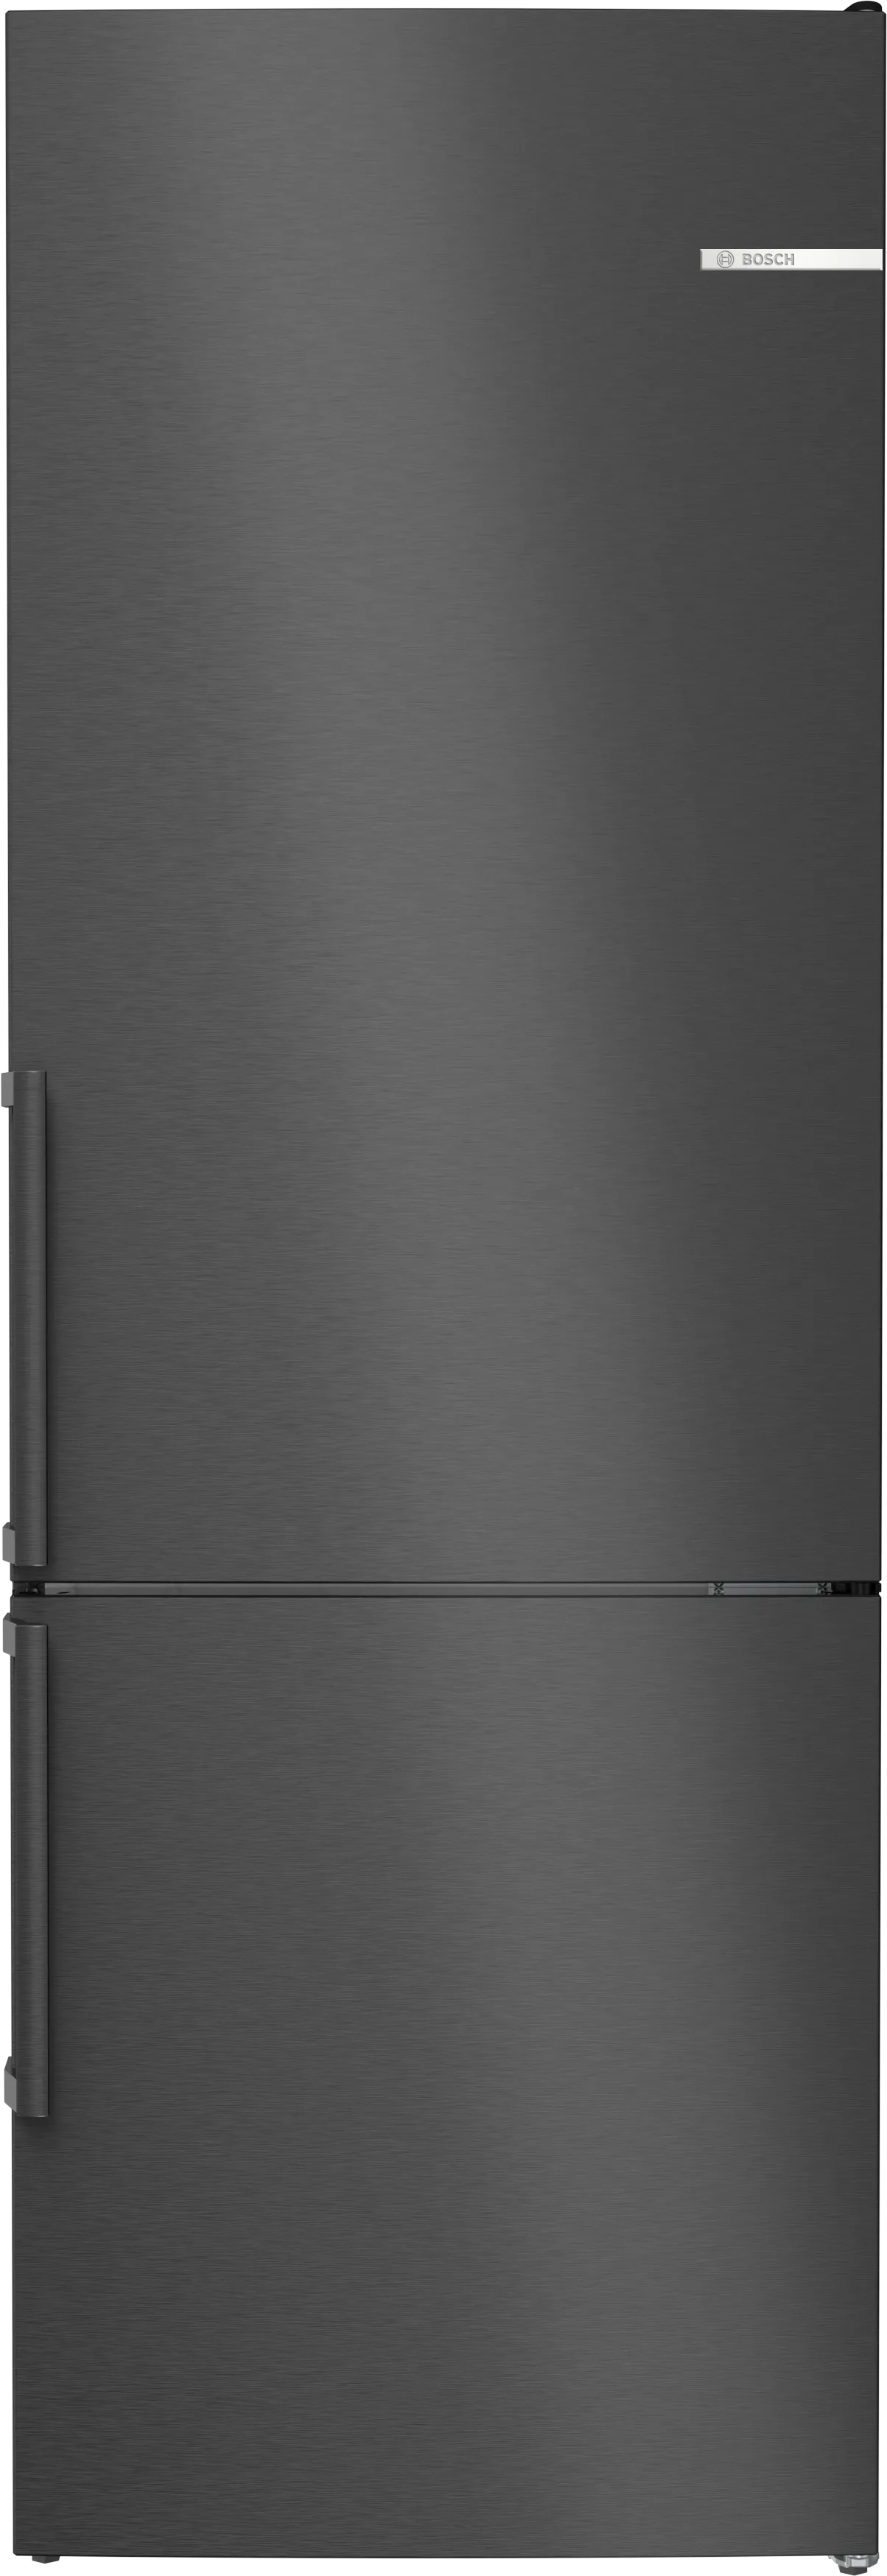 Series 4 free-standing fridge-freezer with freezer at bottom 203 x 70 cm Black stainless steel 